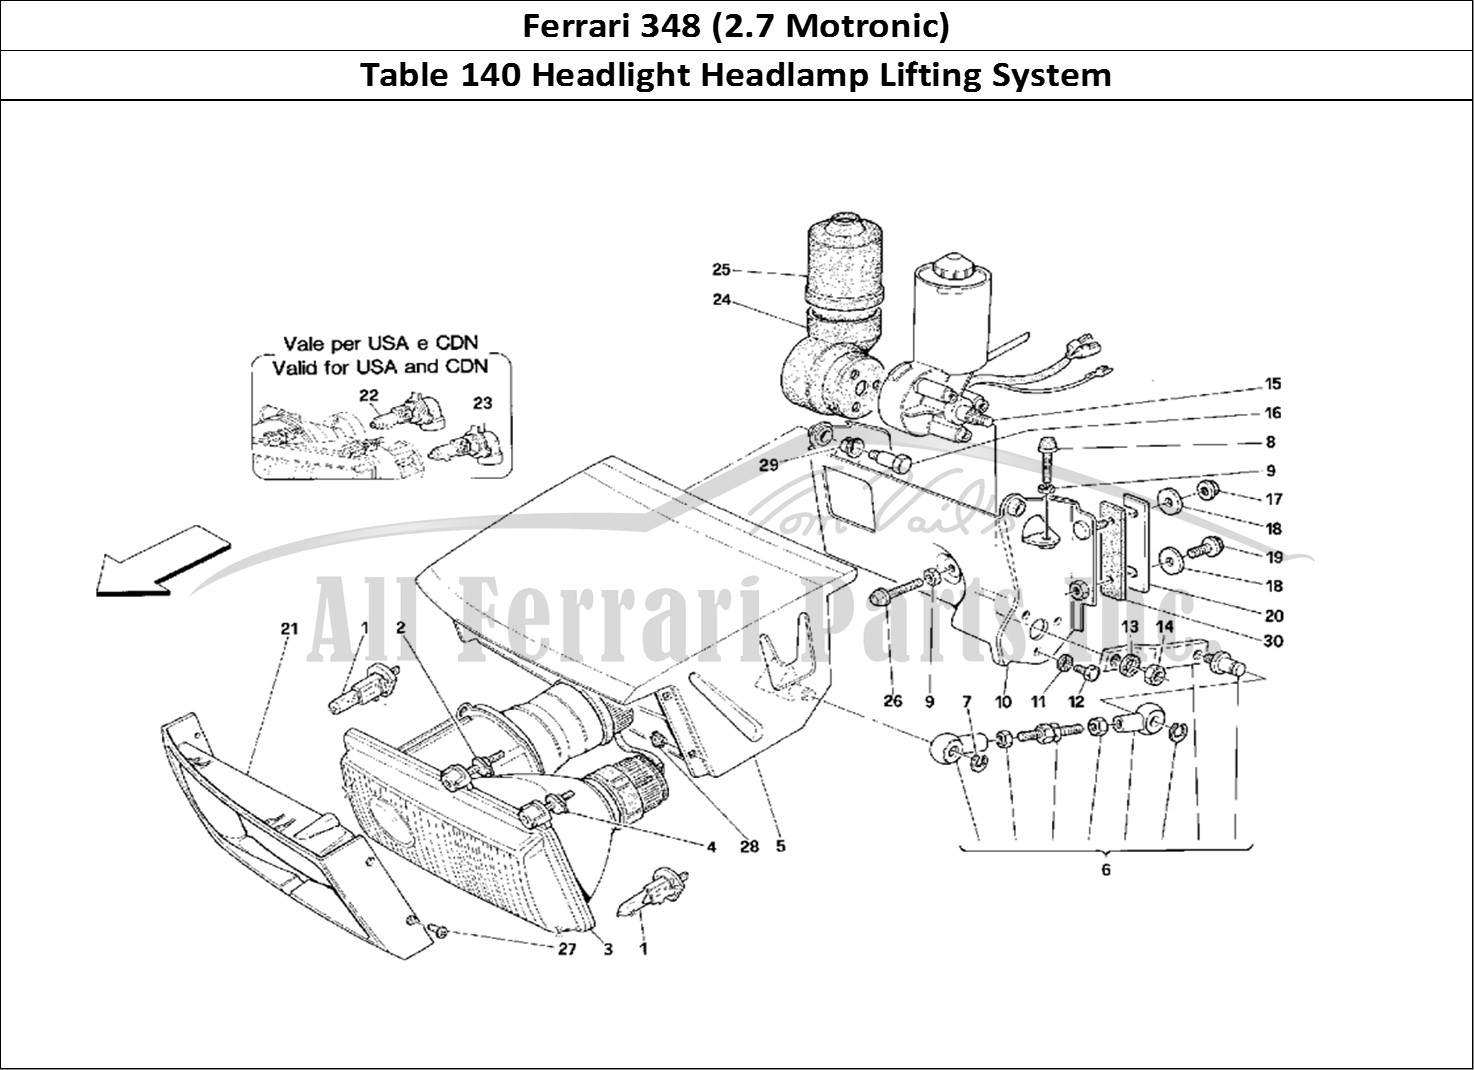 Ferrari Parts Ferrari 348 (2.7 Motronic) Page 140 Lights Lifting Device and